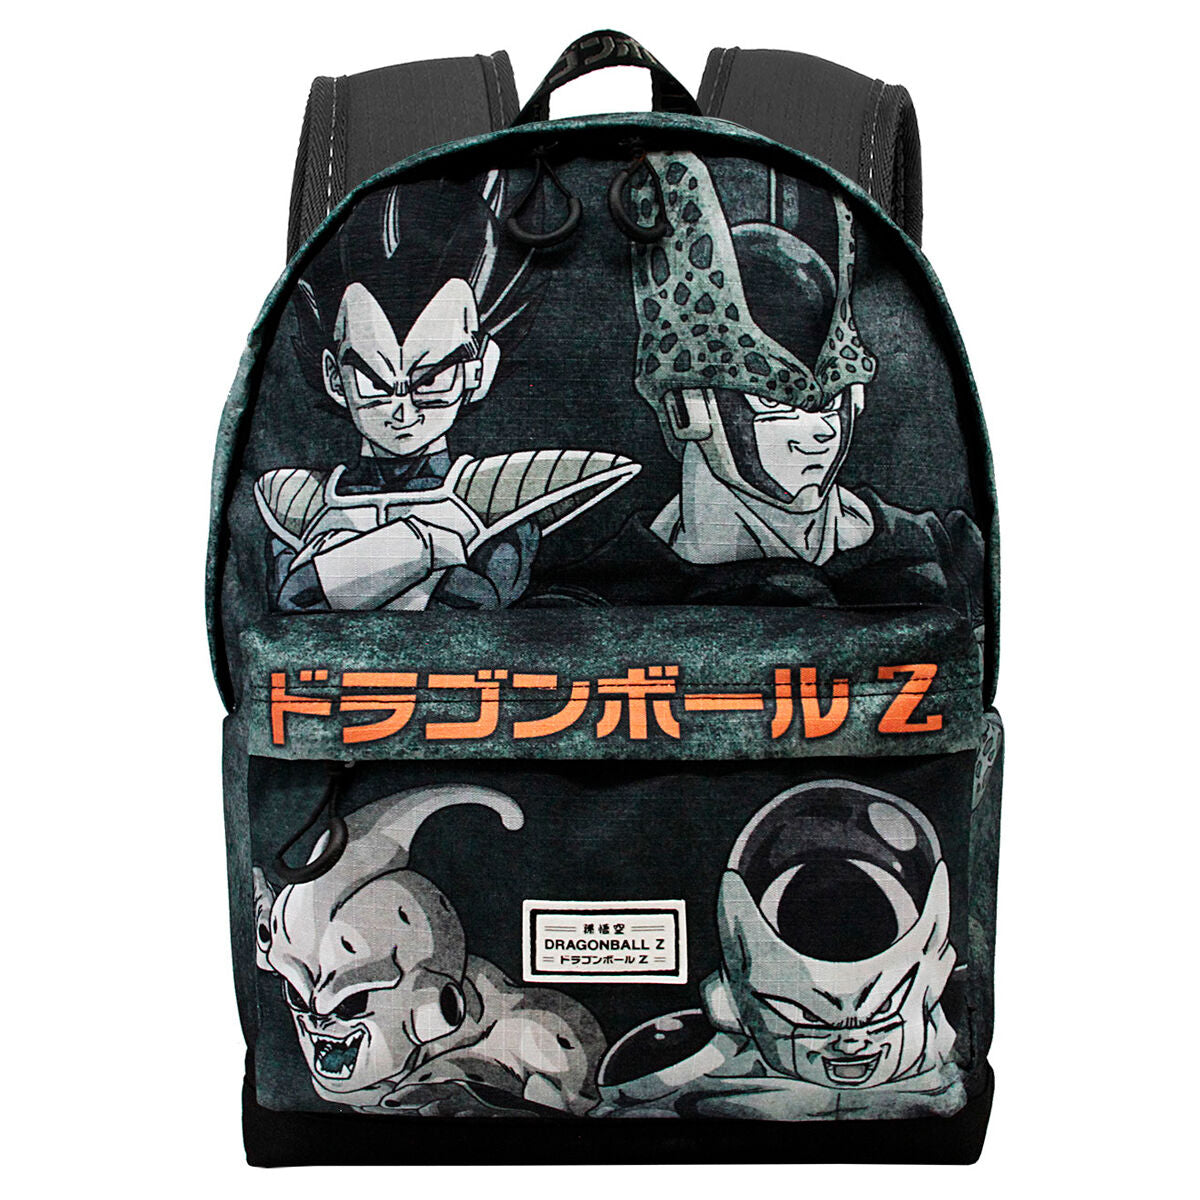 Dragon Ball Evil backpack